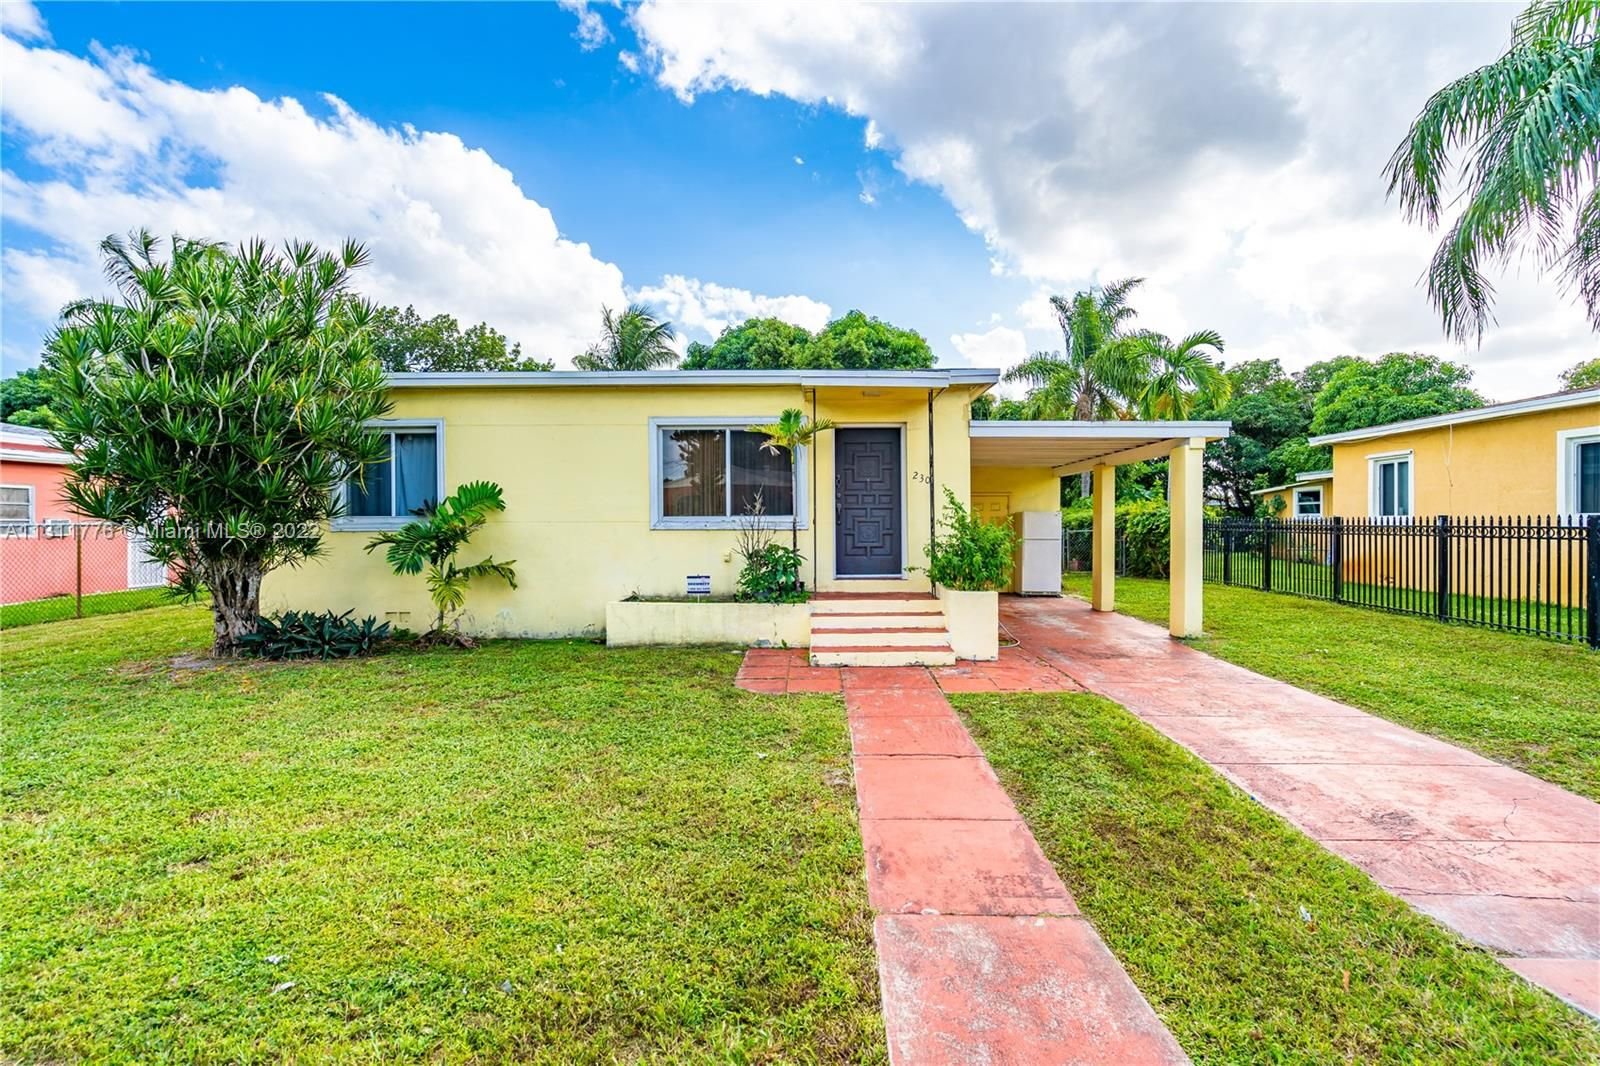 Real estate property located at 230 118th St, Miami-Dade County, Miami, FL